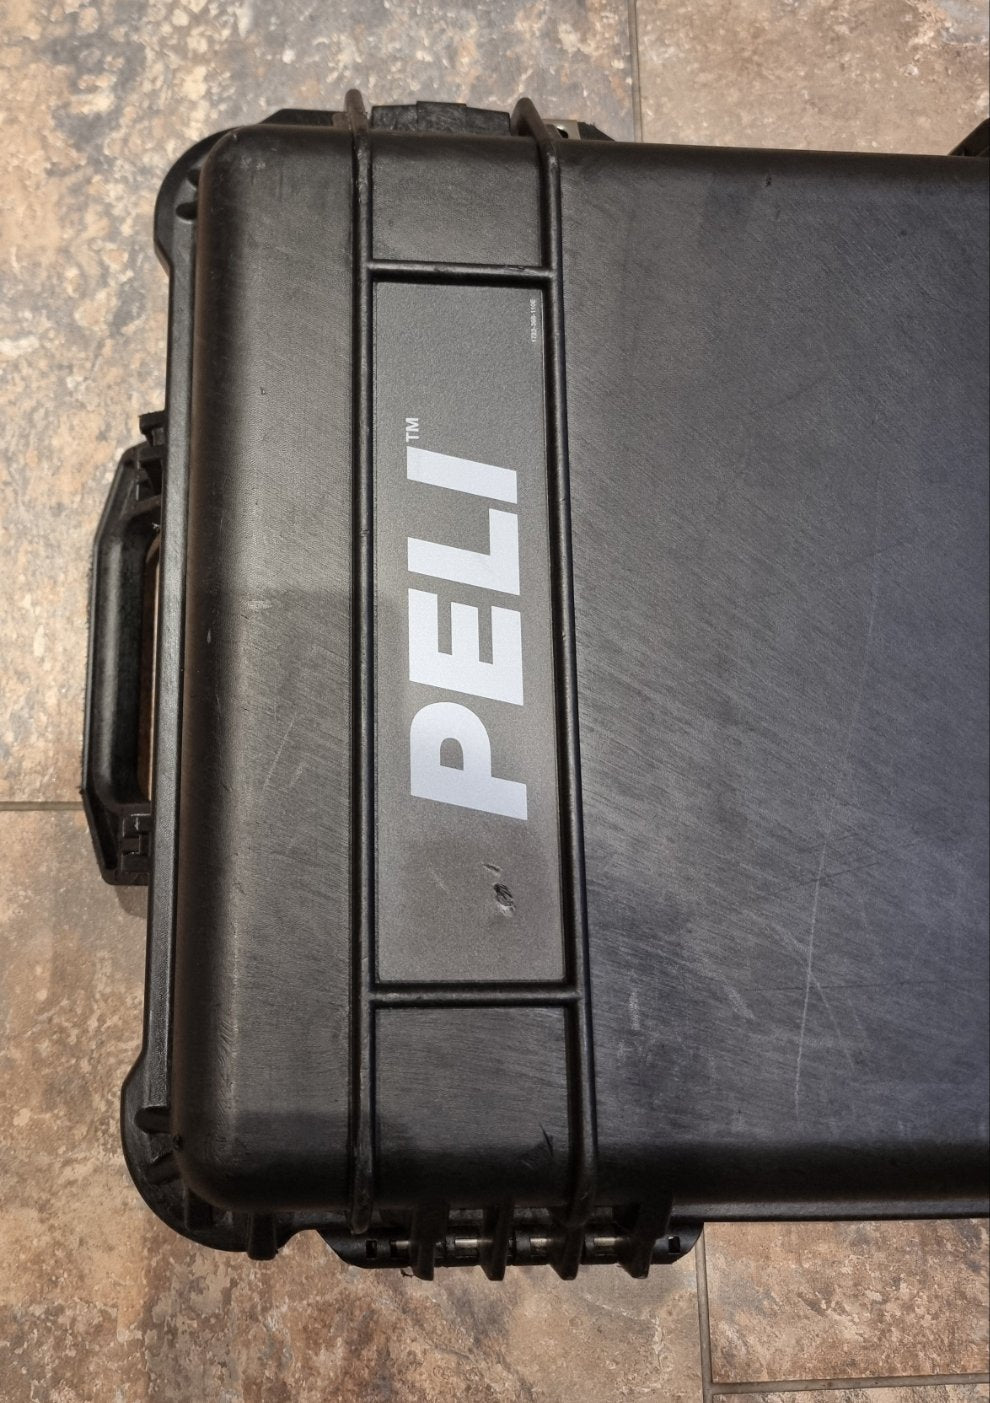 Quality Used Peli 1720 Case